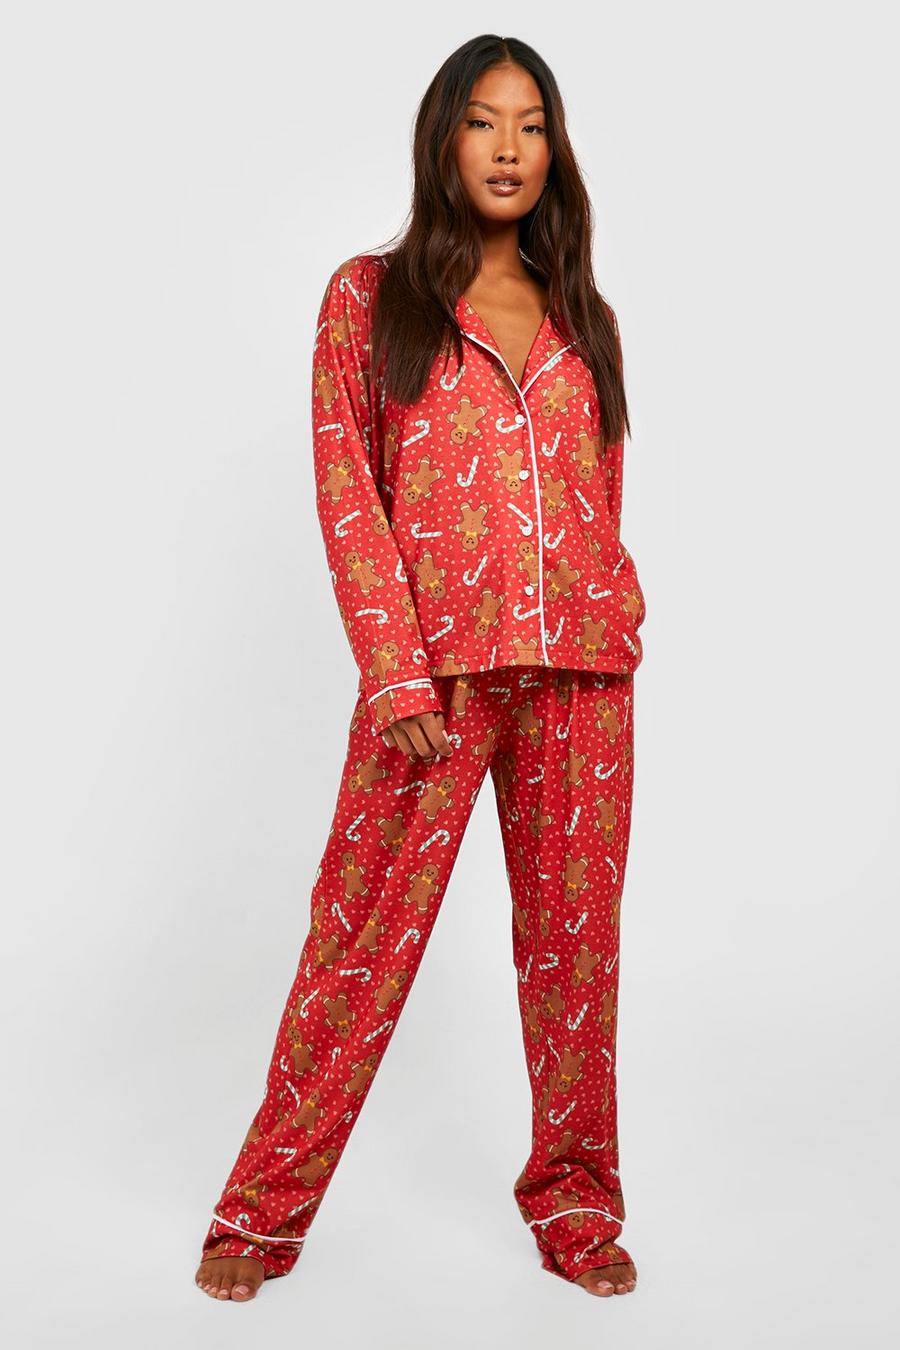 Kleding Dameskleding Pyjamas & Badjassen Pyjamashorts & Pyjamabroeken Broek Super Schattige Tweety Bird PJ Broek 